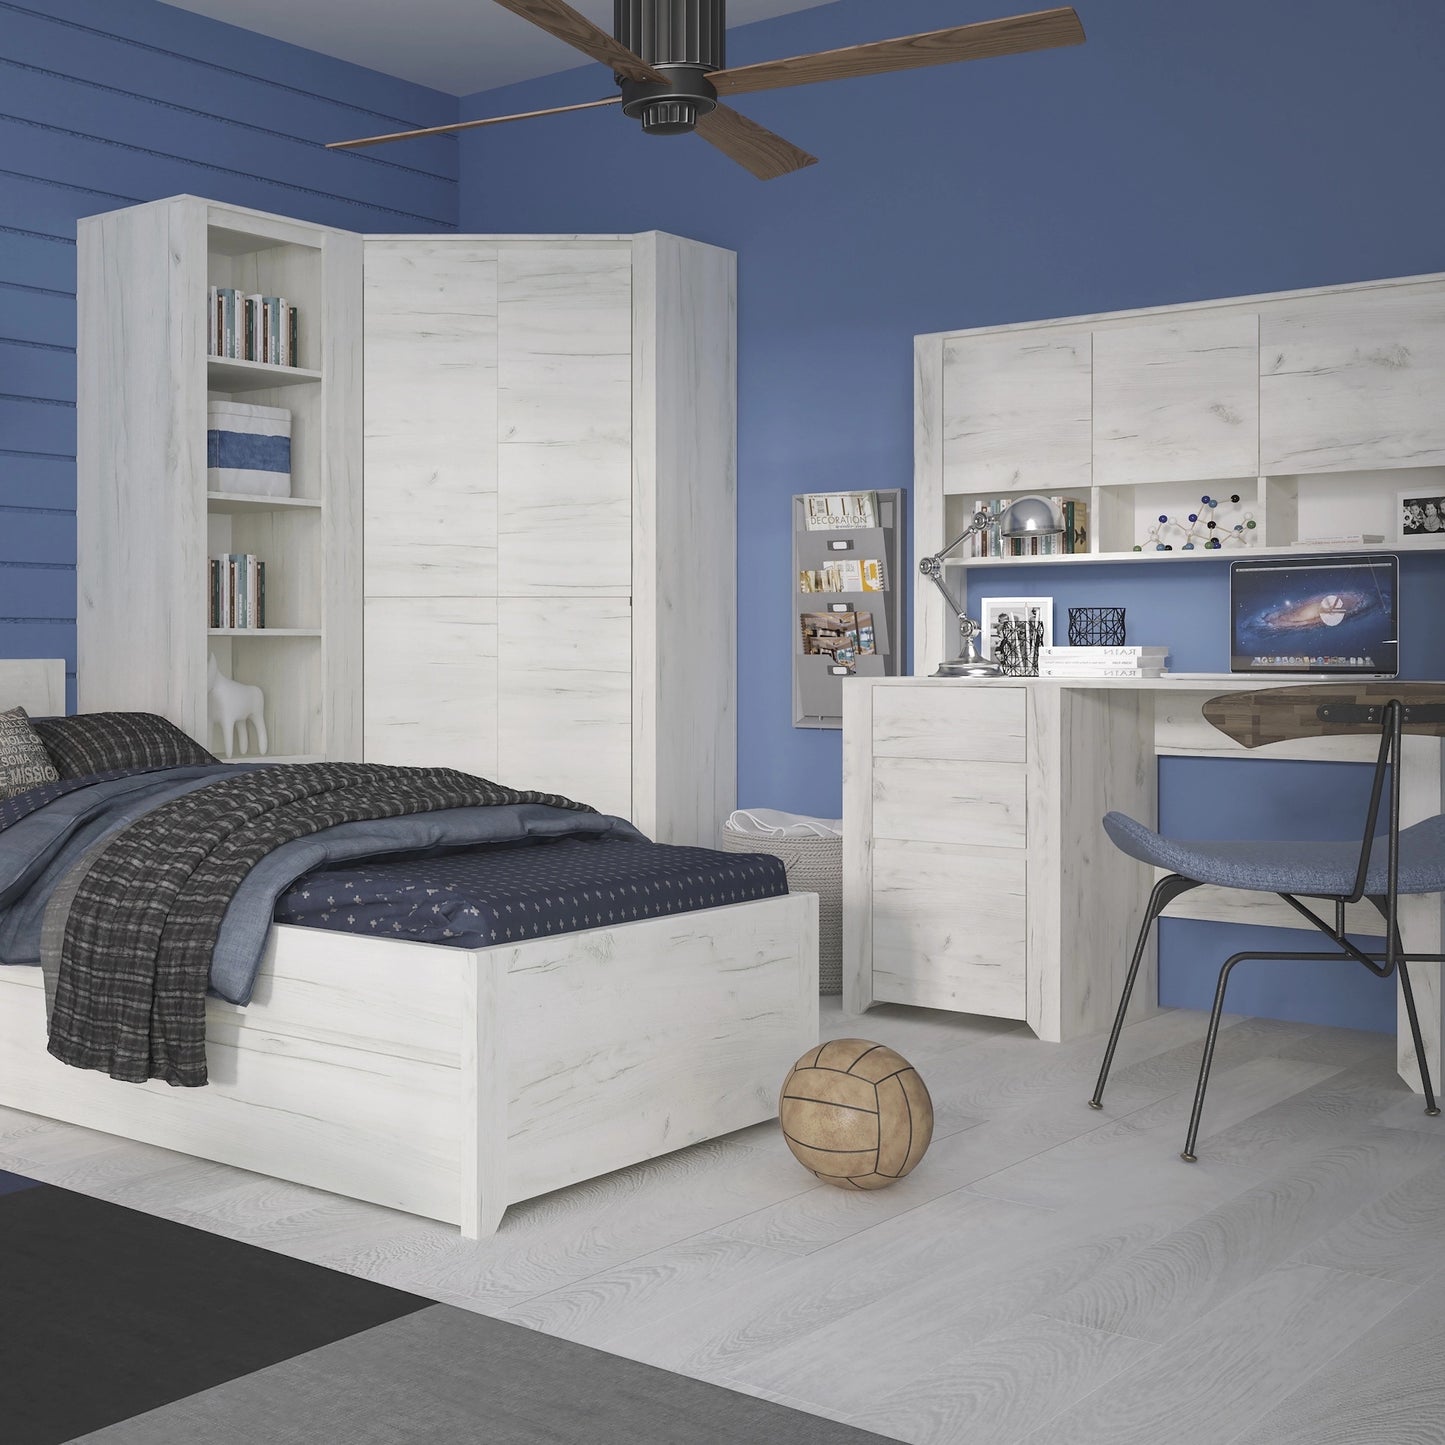 Furniture To Go Angel Corner Fitted Wardrobe in White Craft Oak